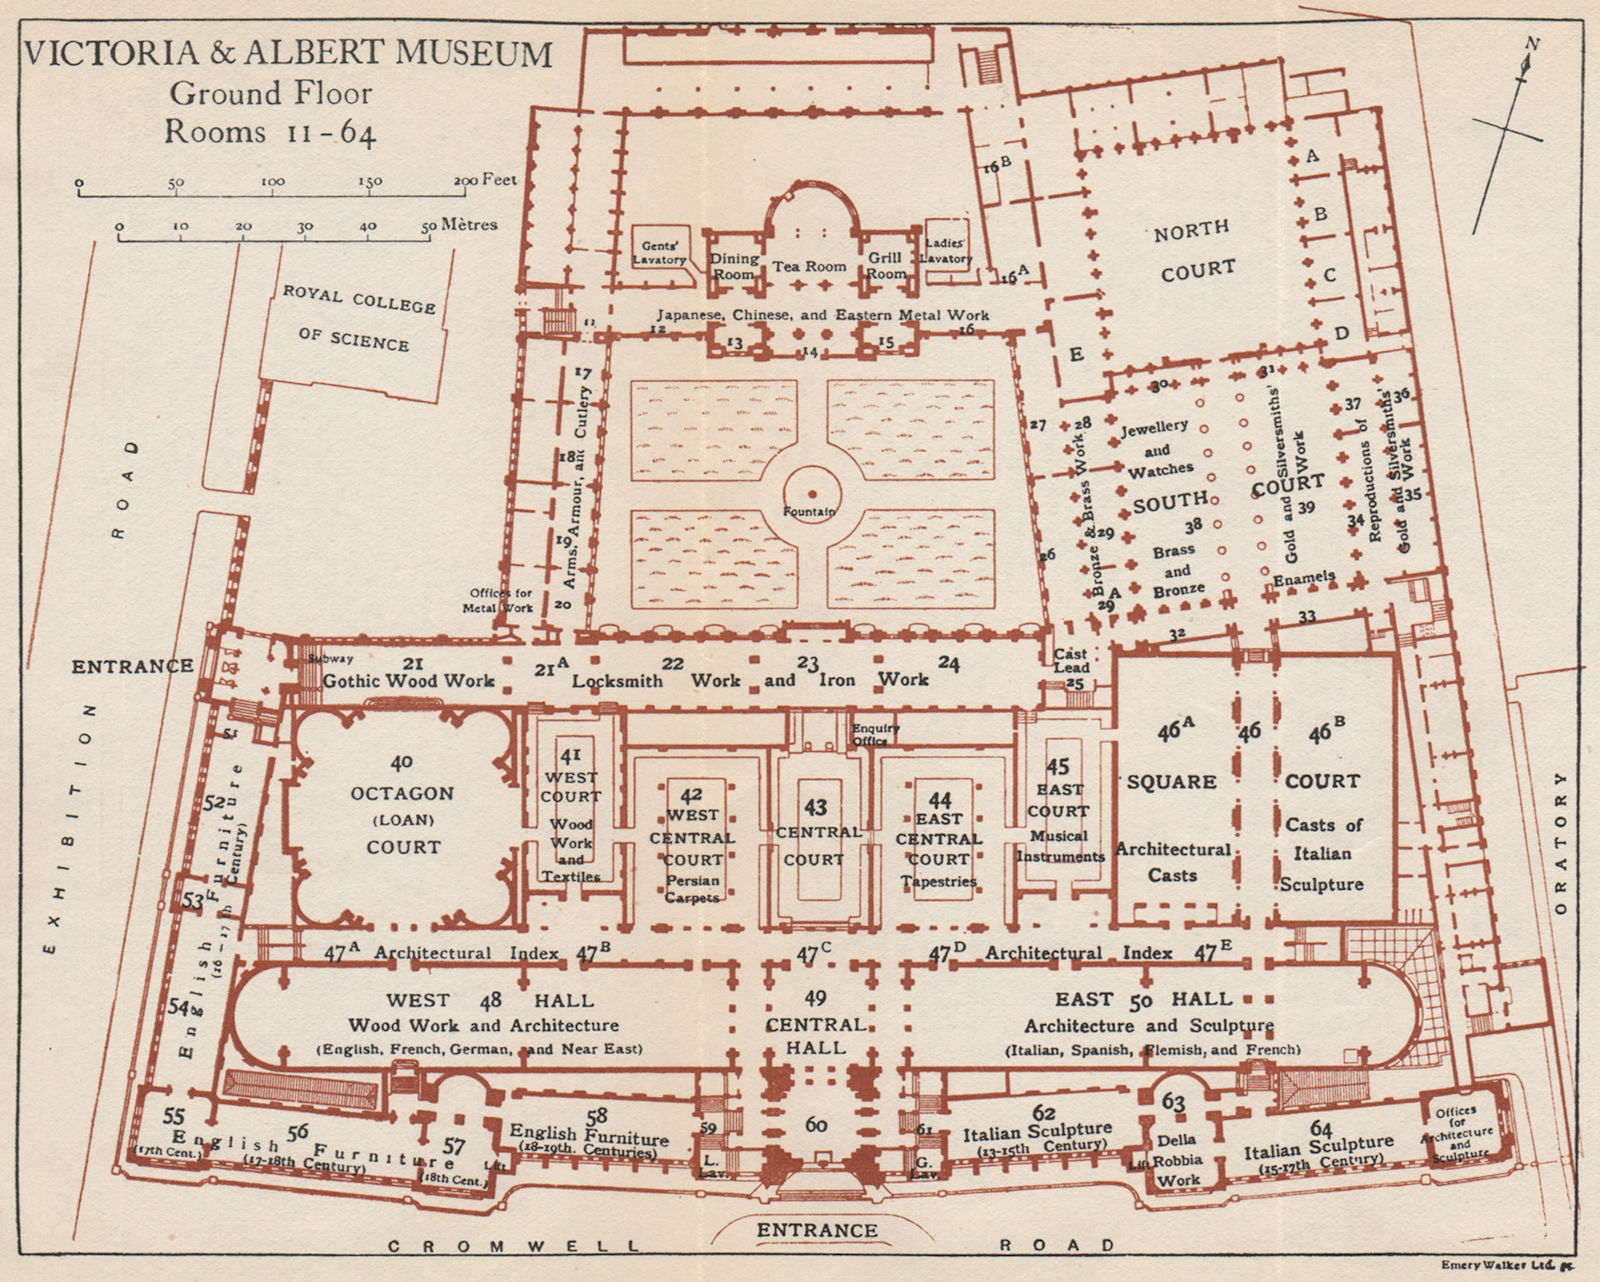 VICTORIA & ALBERT MUSEUM. Ground floor vintage plan. South Kensington 1935 map